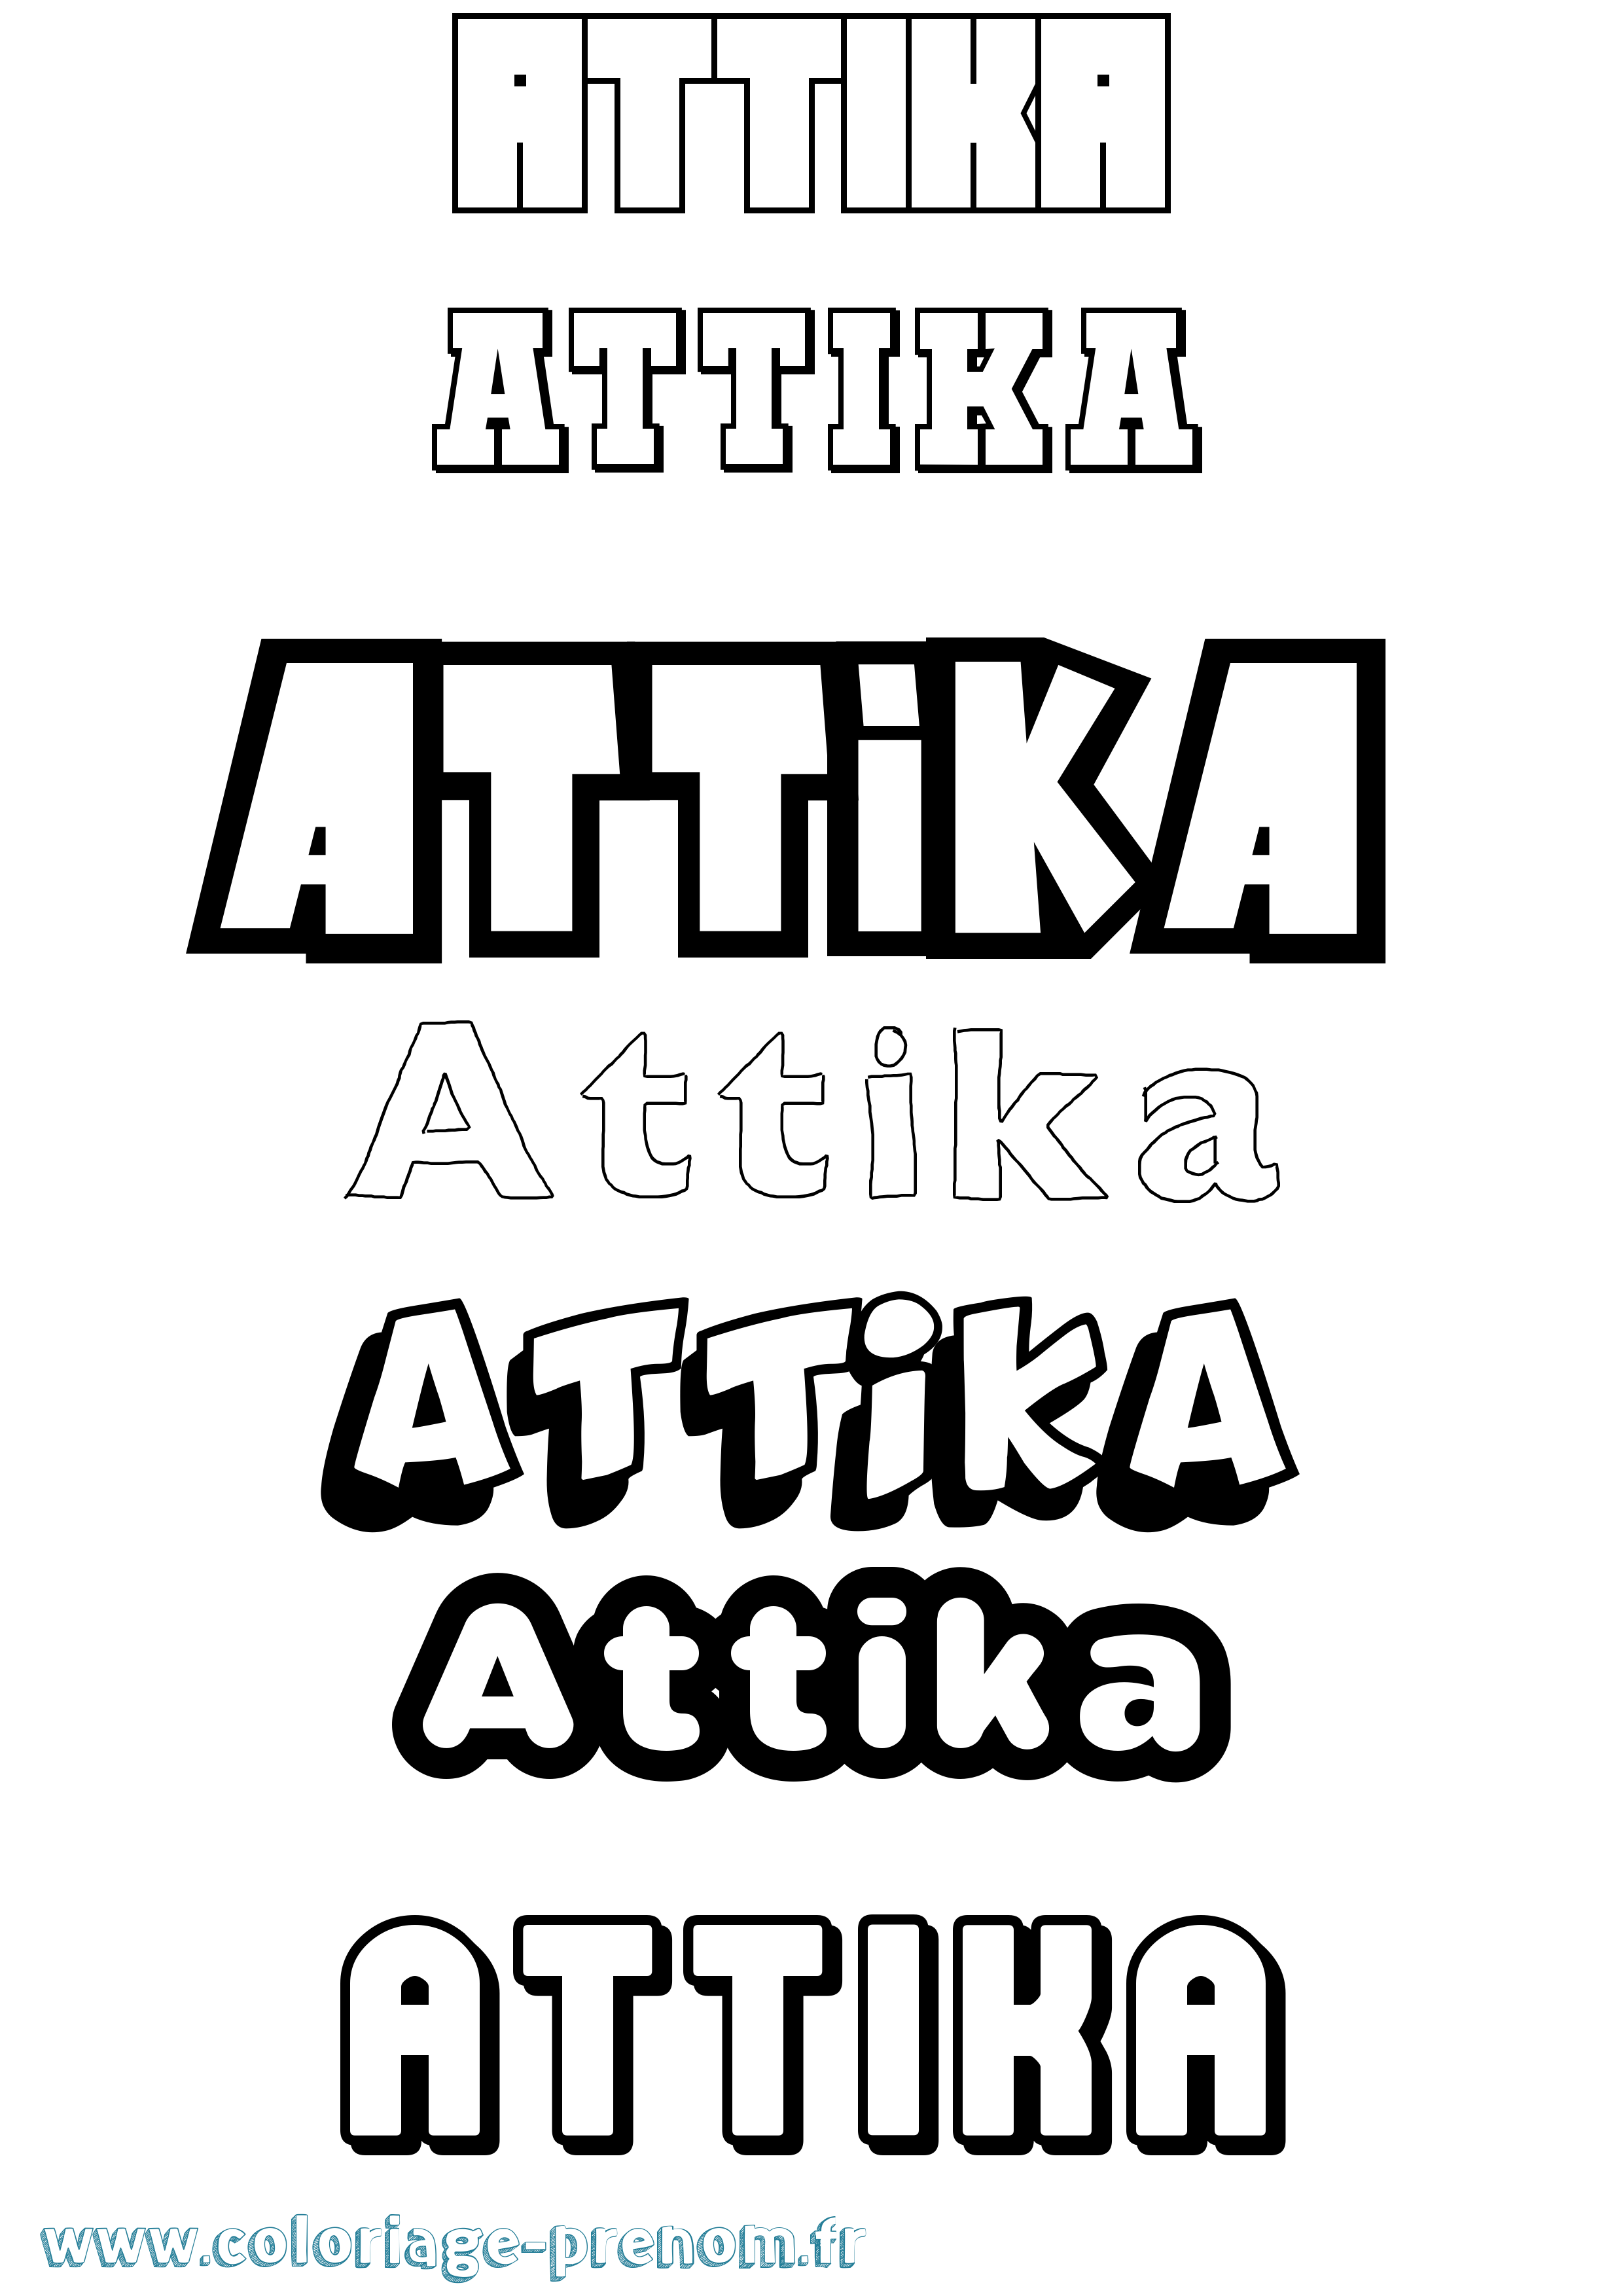 Coloriage prénom Attika Simple